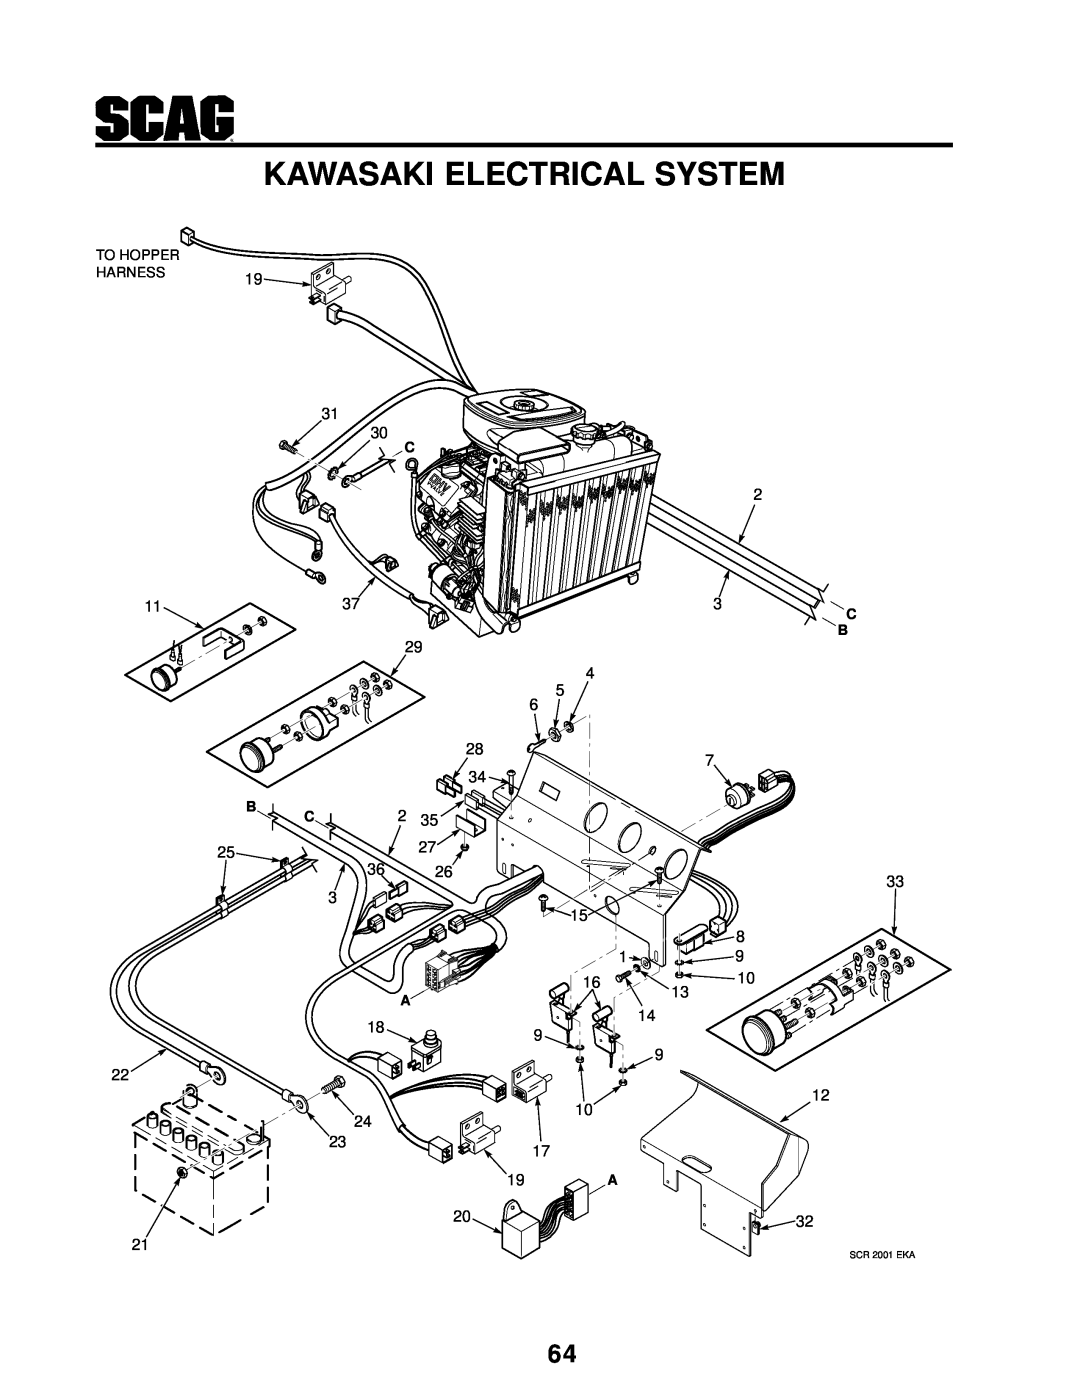 MB QUART manual Kawasaki Electrical System, SCR 2001 EKA 